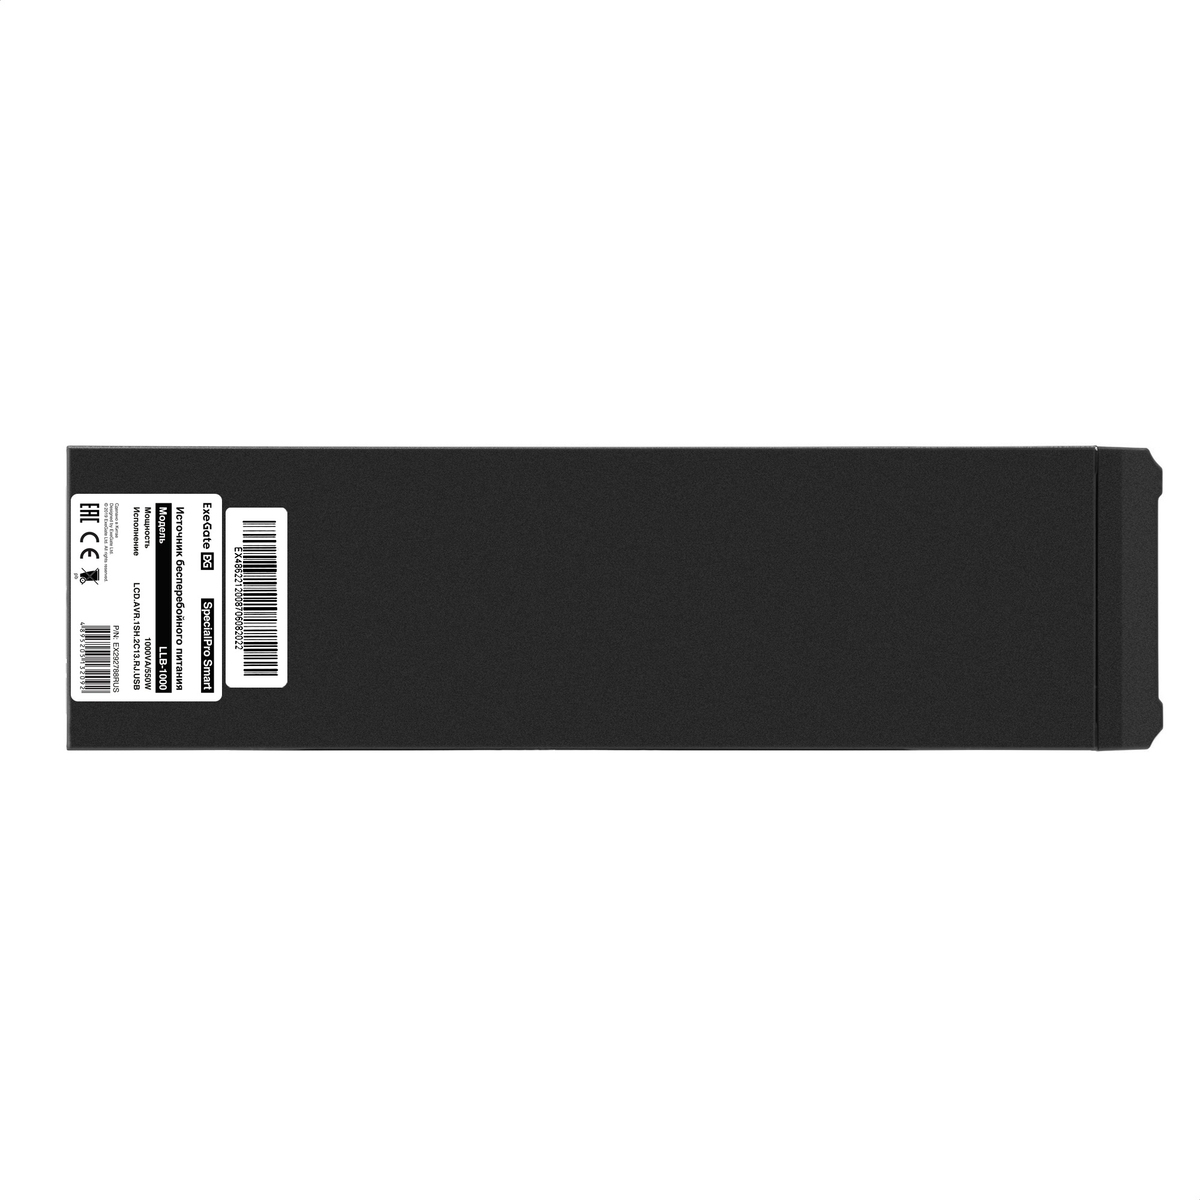 UPS ExeGate SpecialPro Smart LLB-1000.LCD.AVR.1SH.2C13.RJ.USB